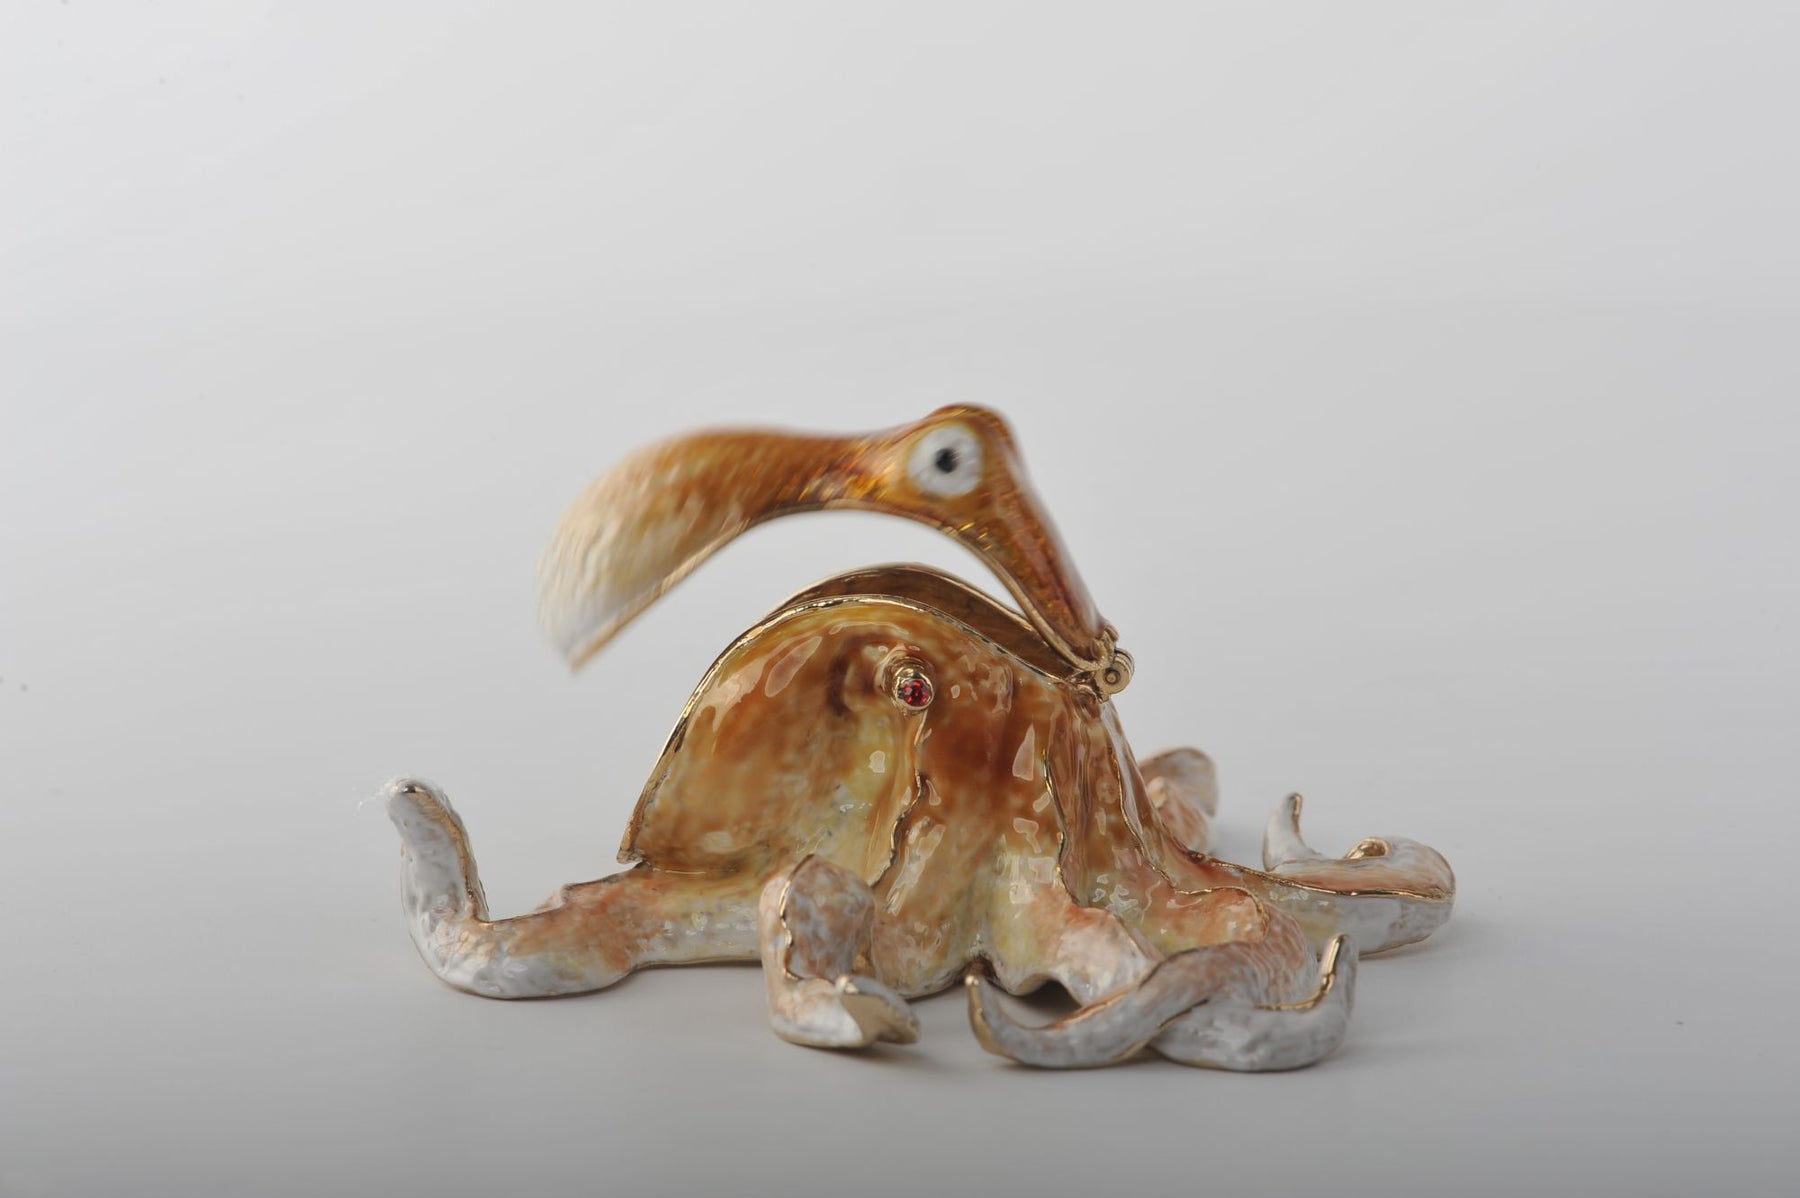 Keren Kopal Octopus Trinket Box  51.50